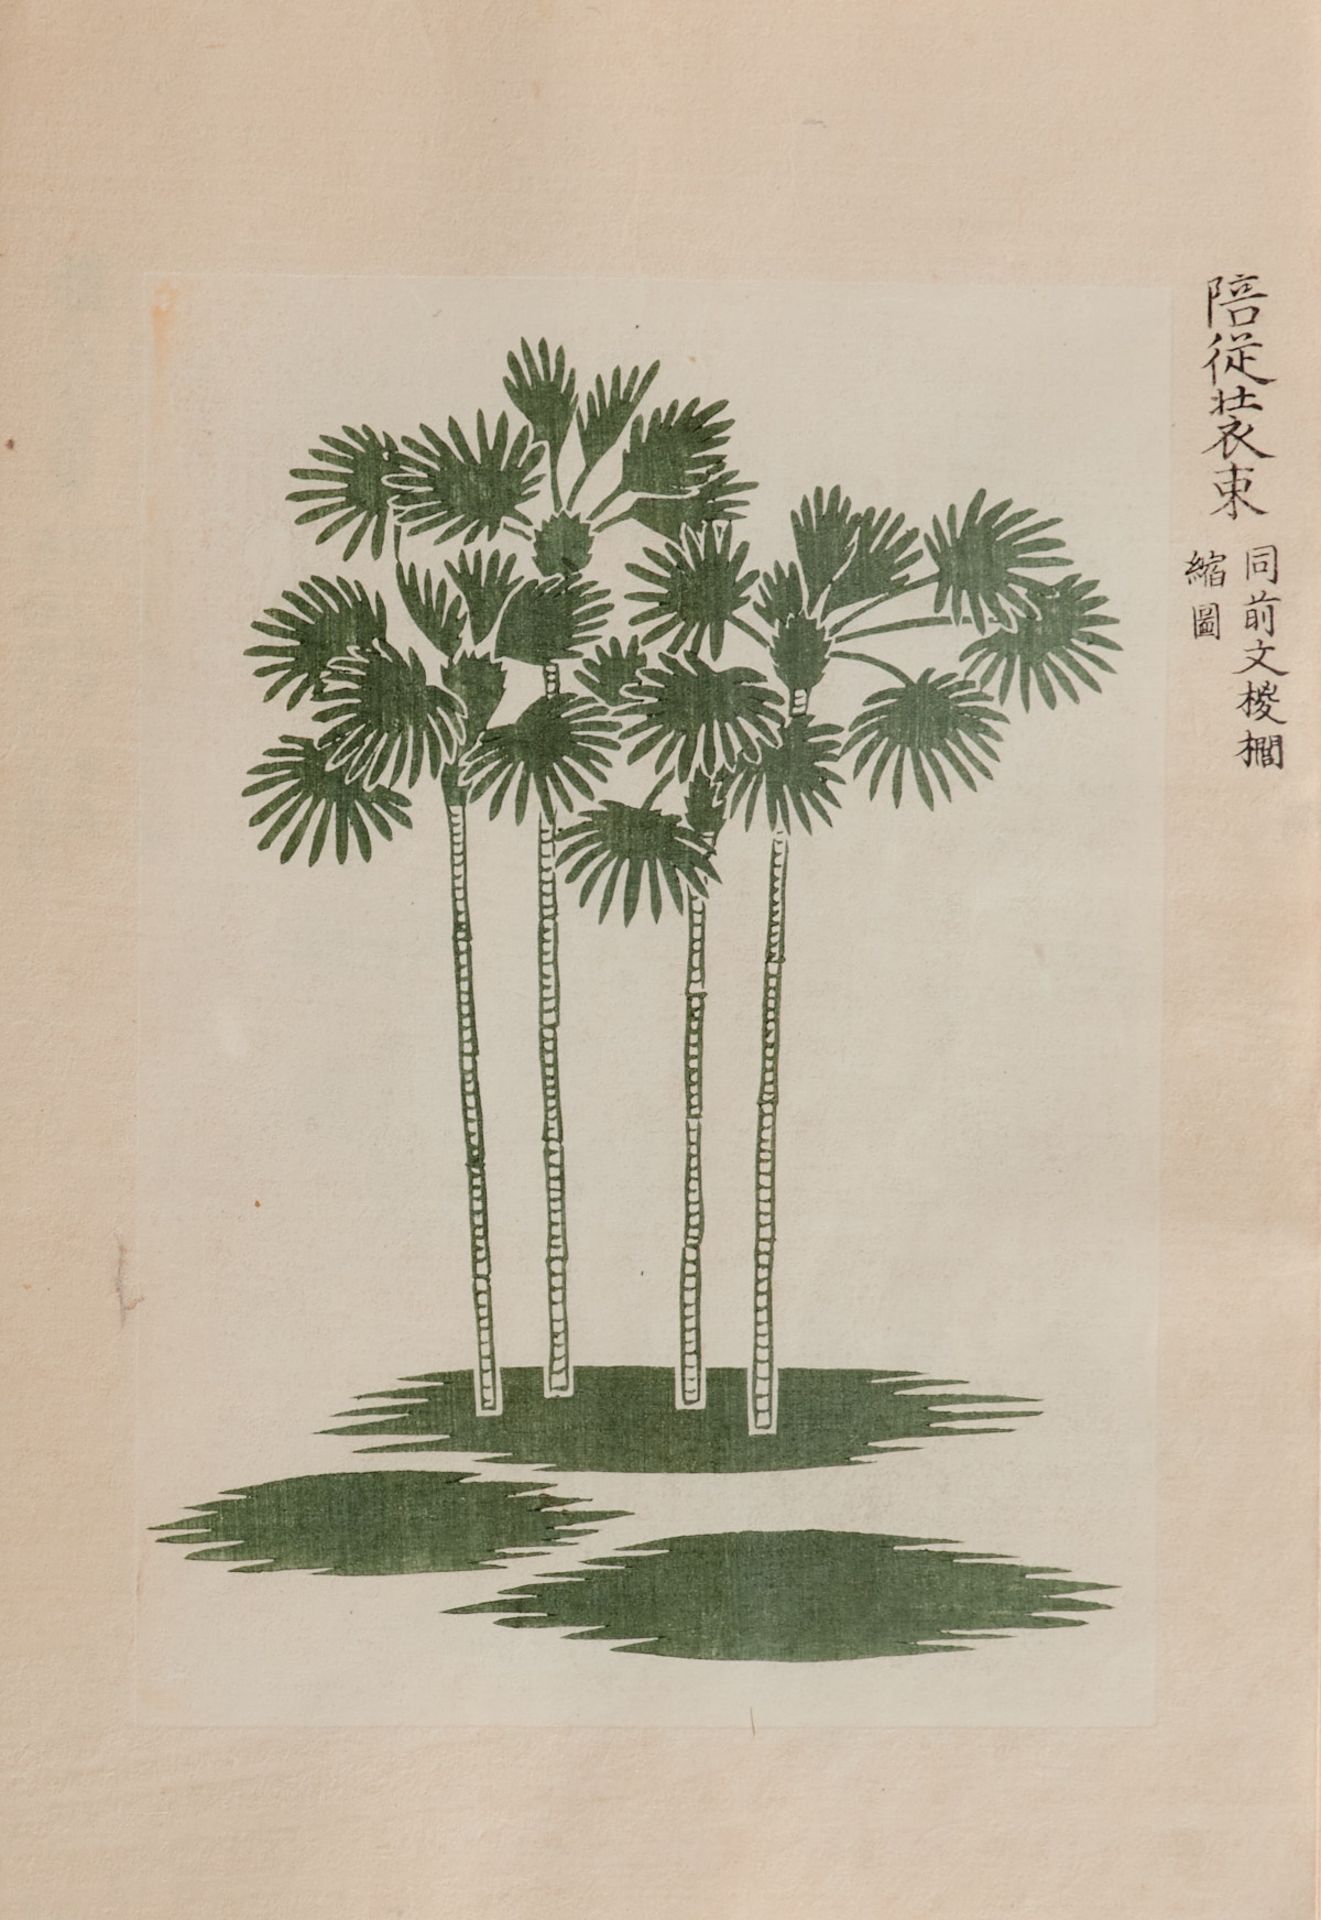 Ostasien Japan Tokikata, Matsuoka, Shokumon zue. 4 Bde. (von 6). Japan, Kansei 12 (1800) bis 1818. - Image 4 of 4